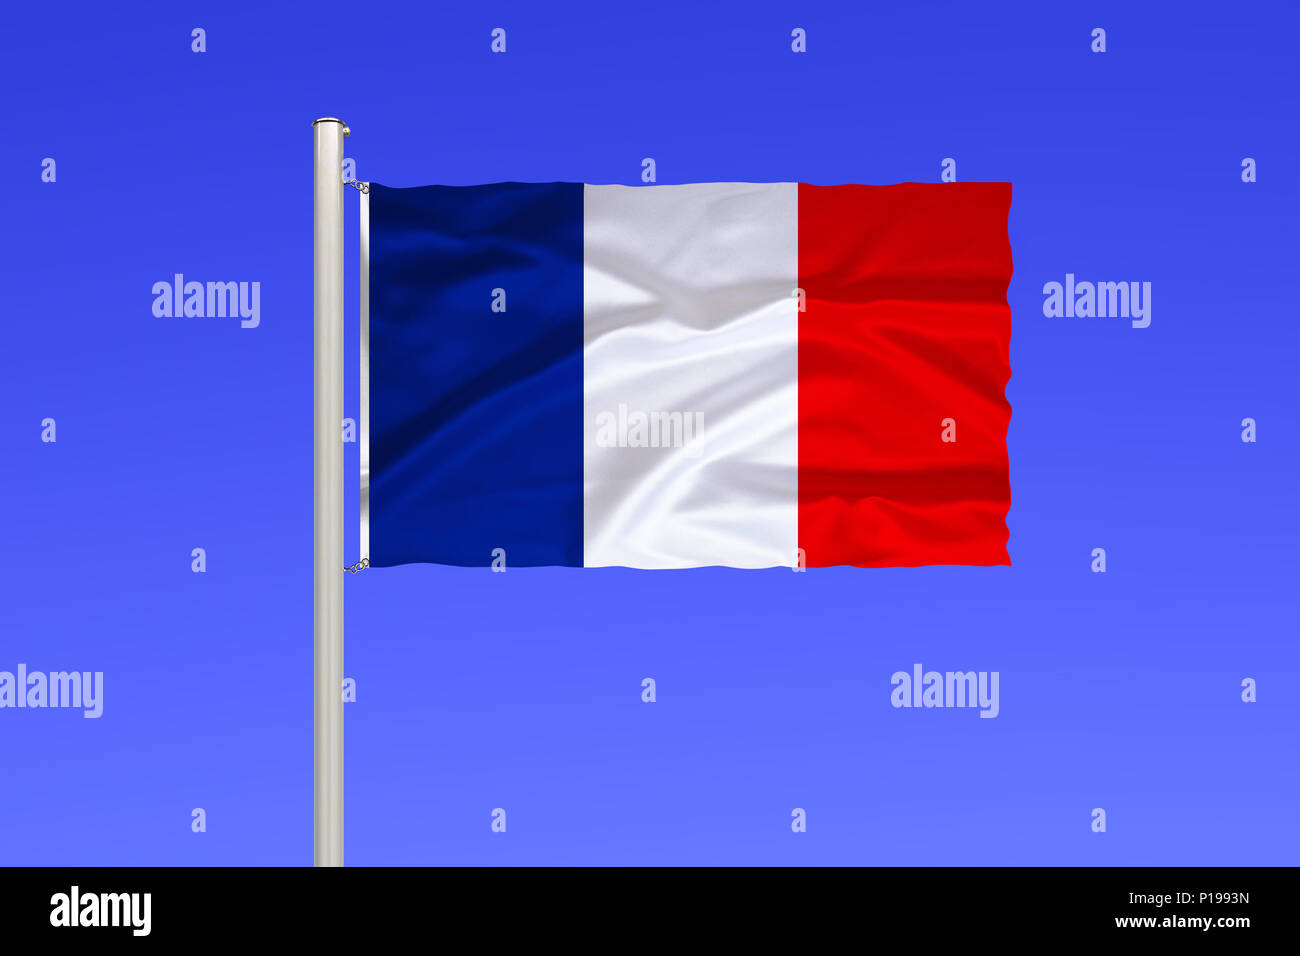 https://c8.alamy.com/comp/P1993N/flag-of-france-flagge-von-frankreich-P1993N.jpg